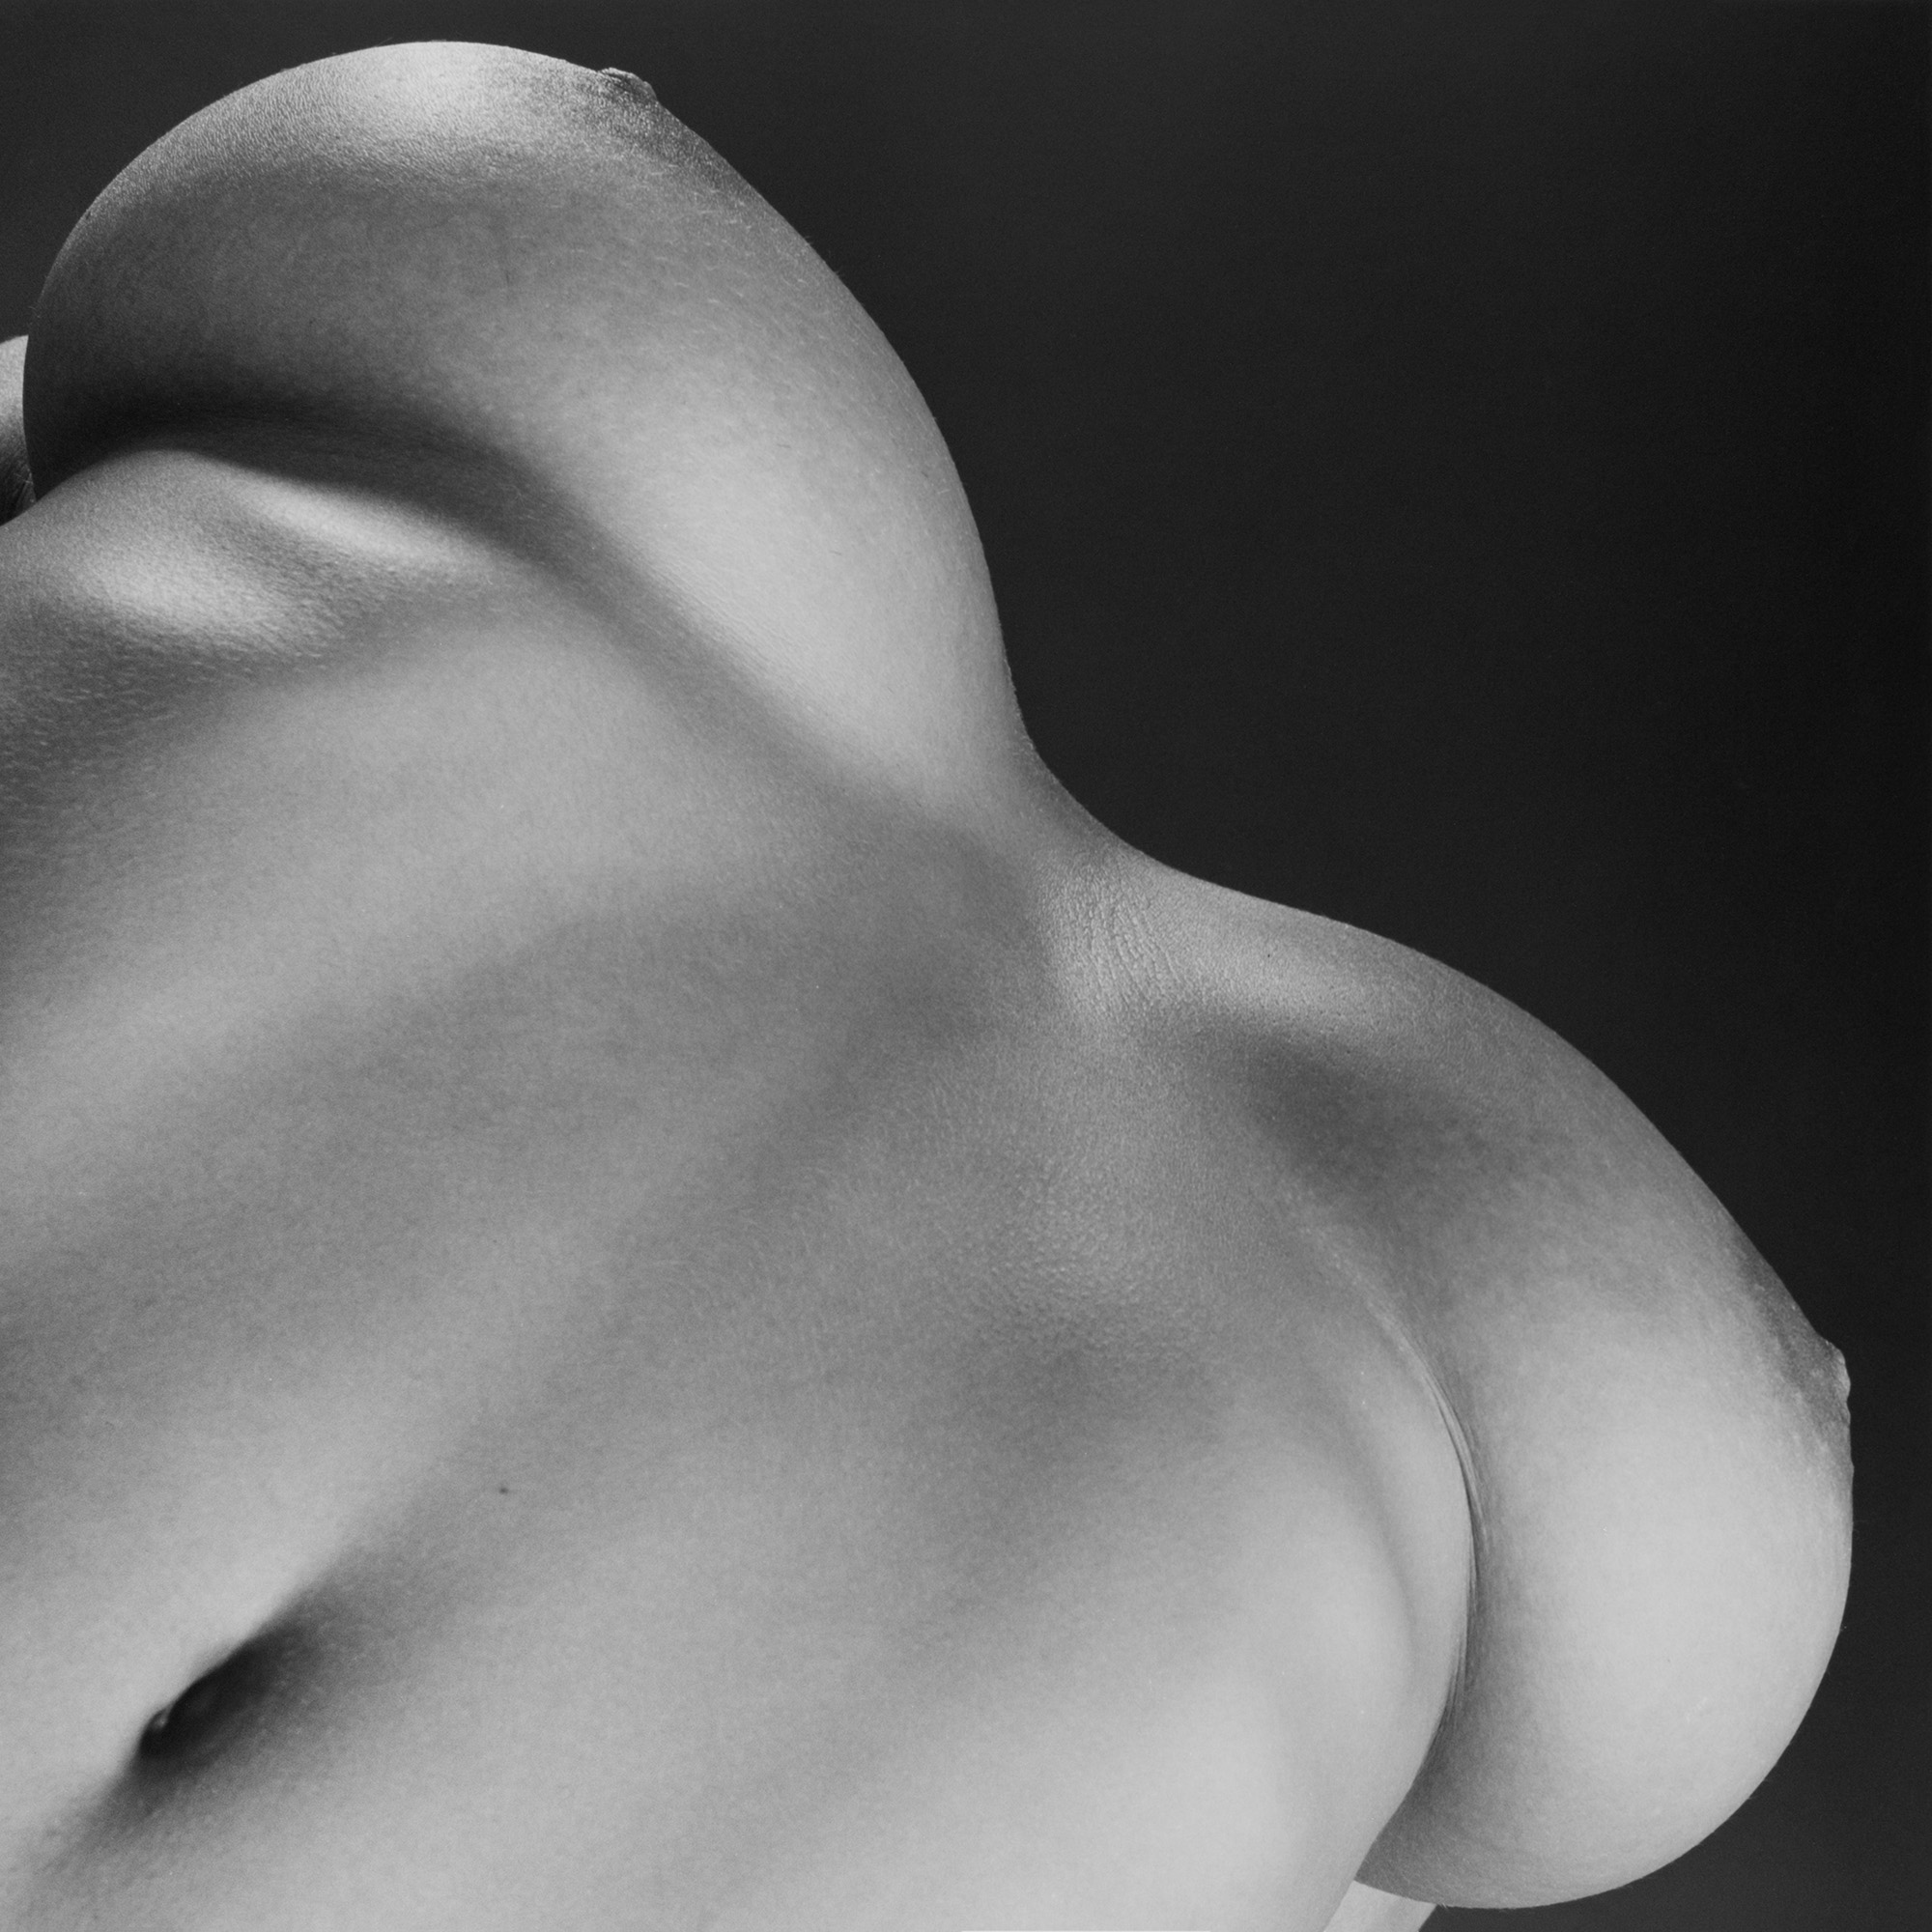 Robert Mapplethorpe breasts